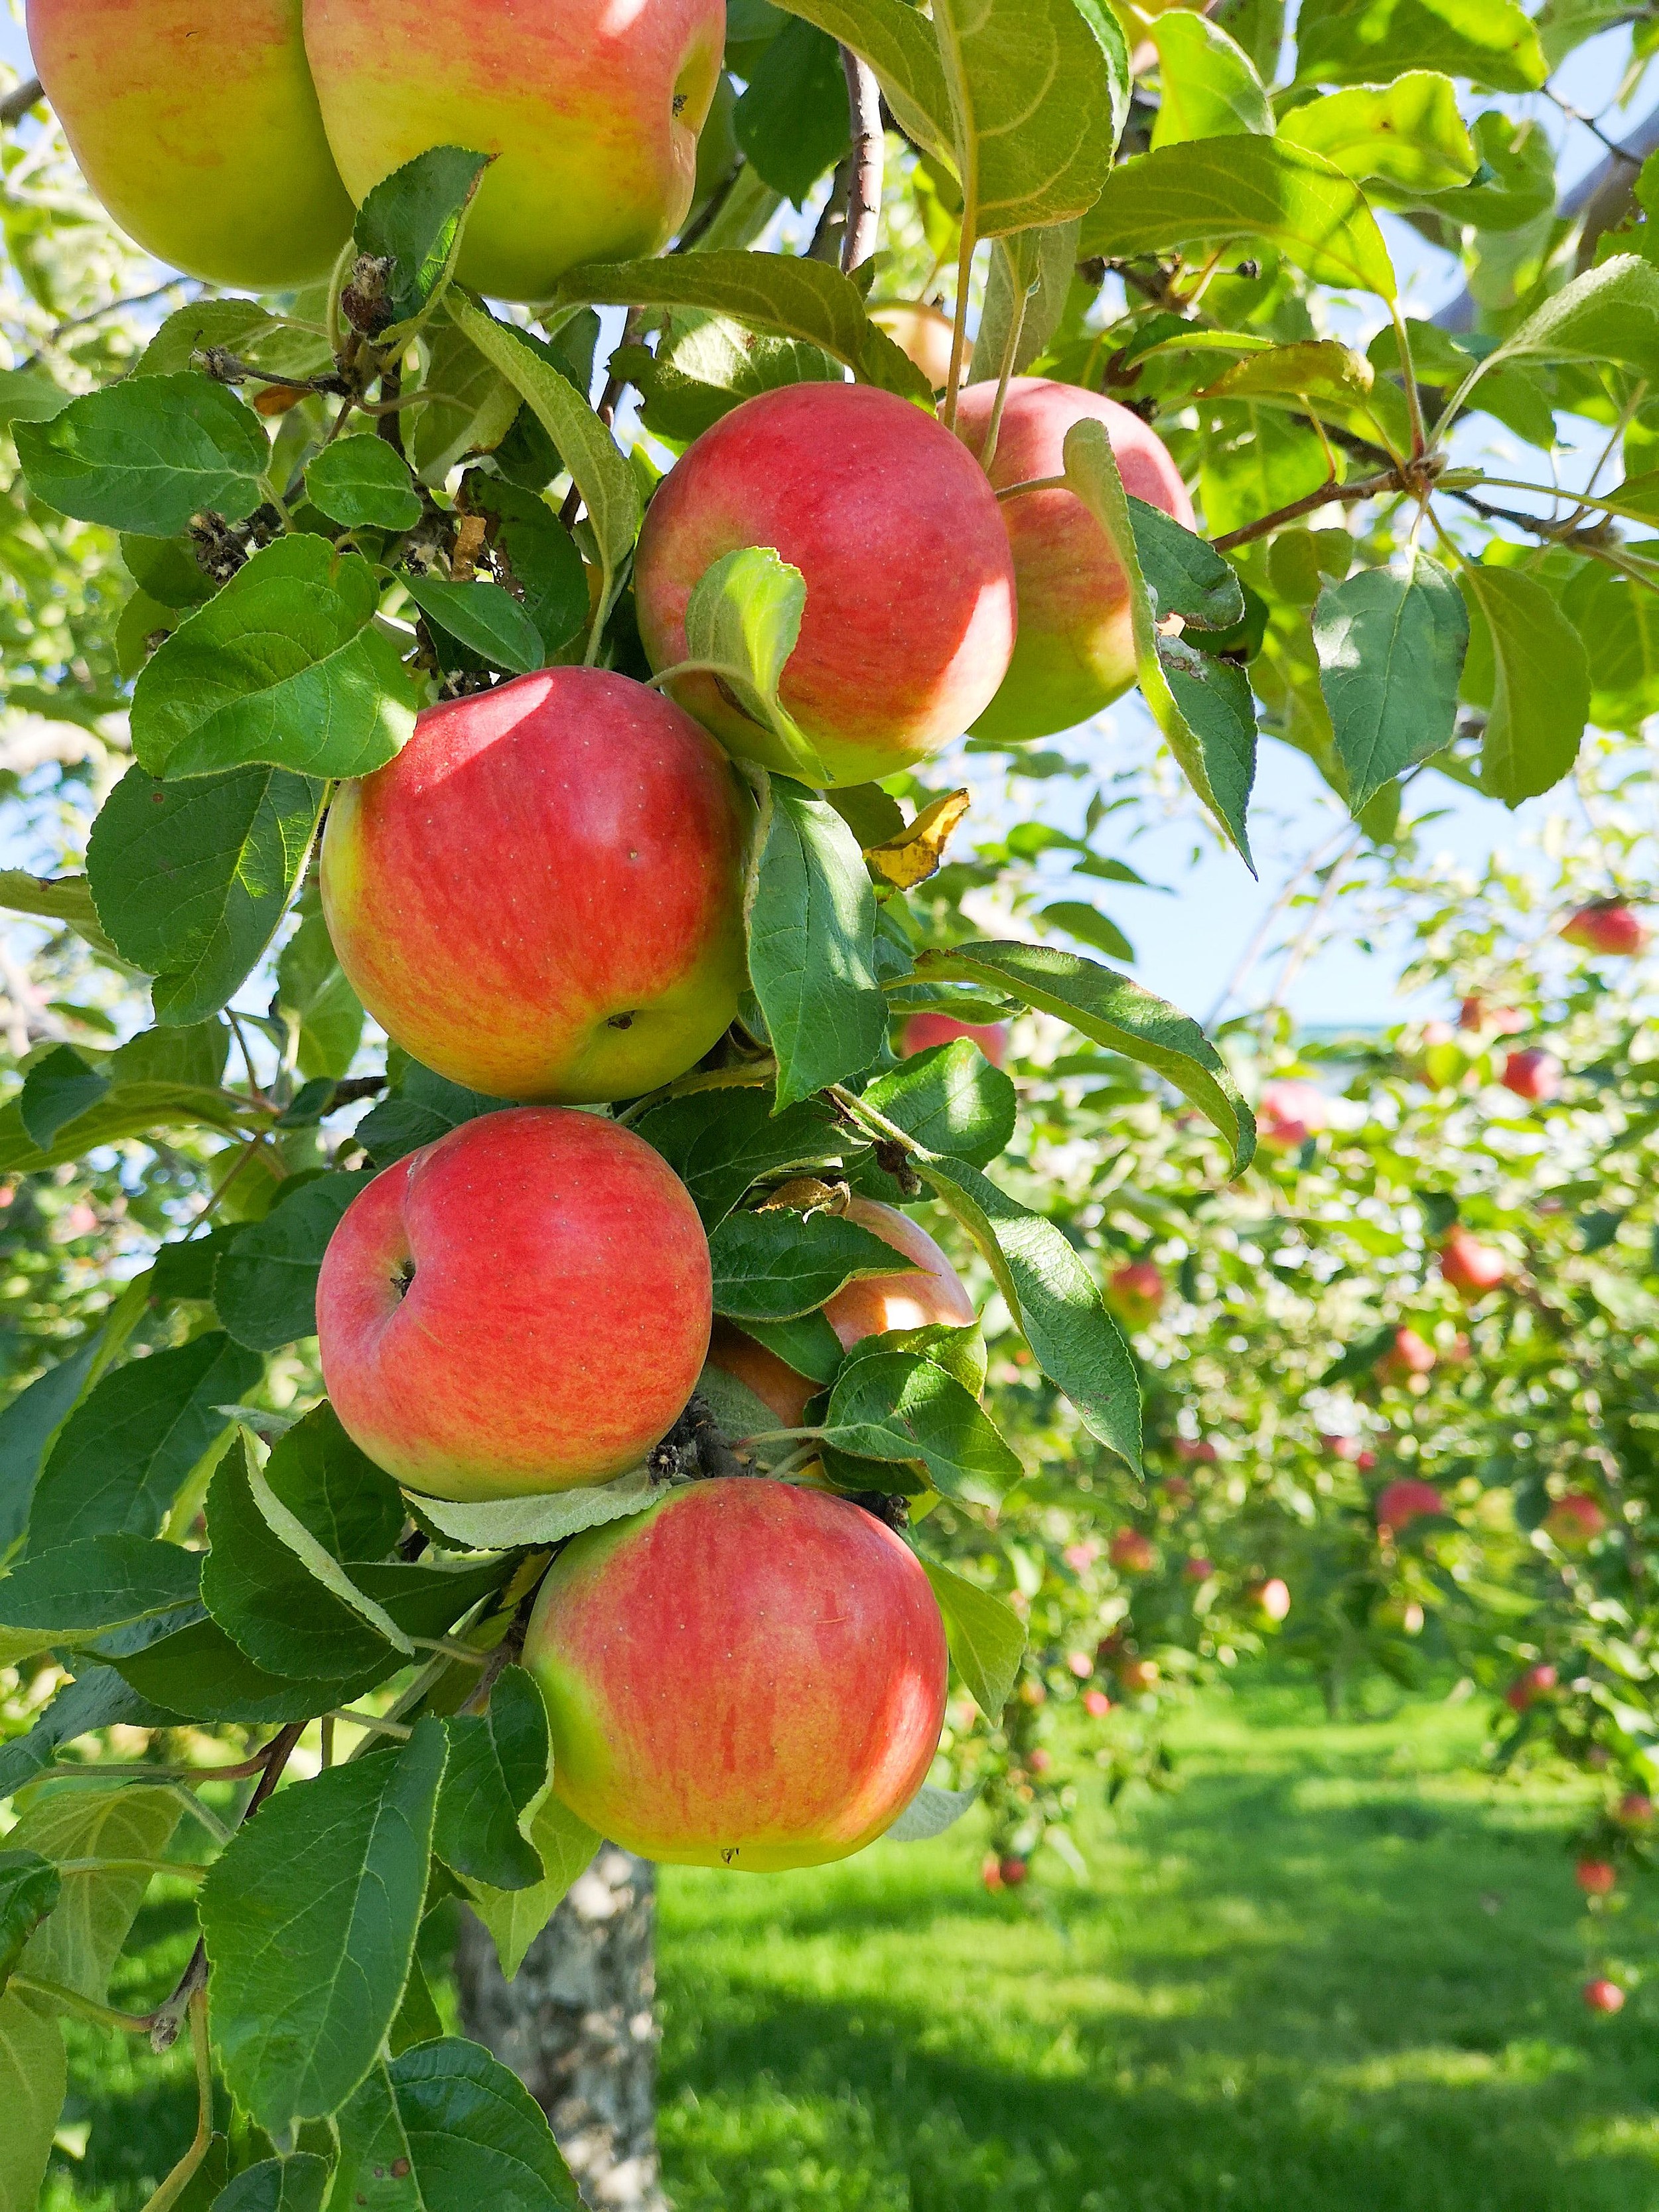 Sweetango agreement riles some apple growers